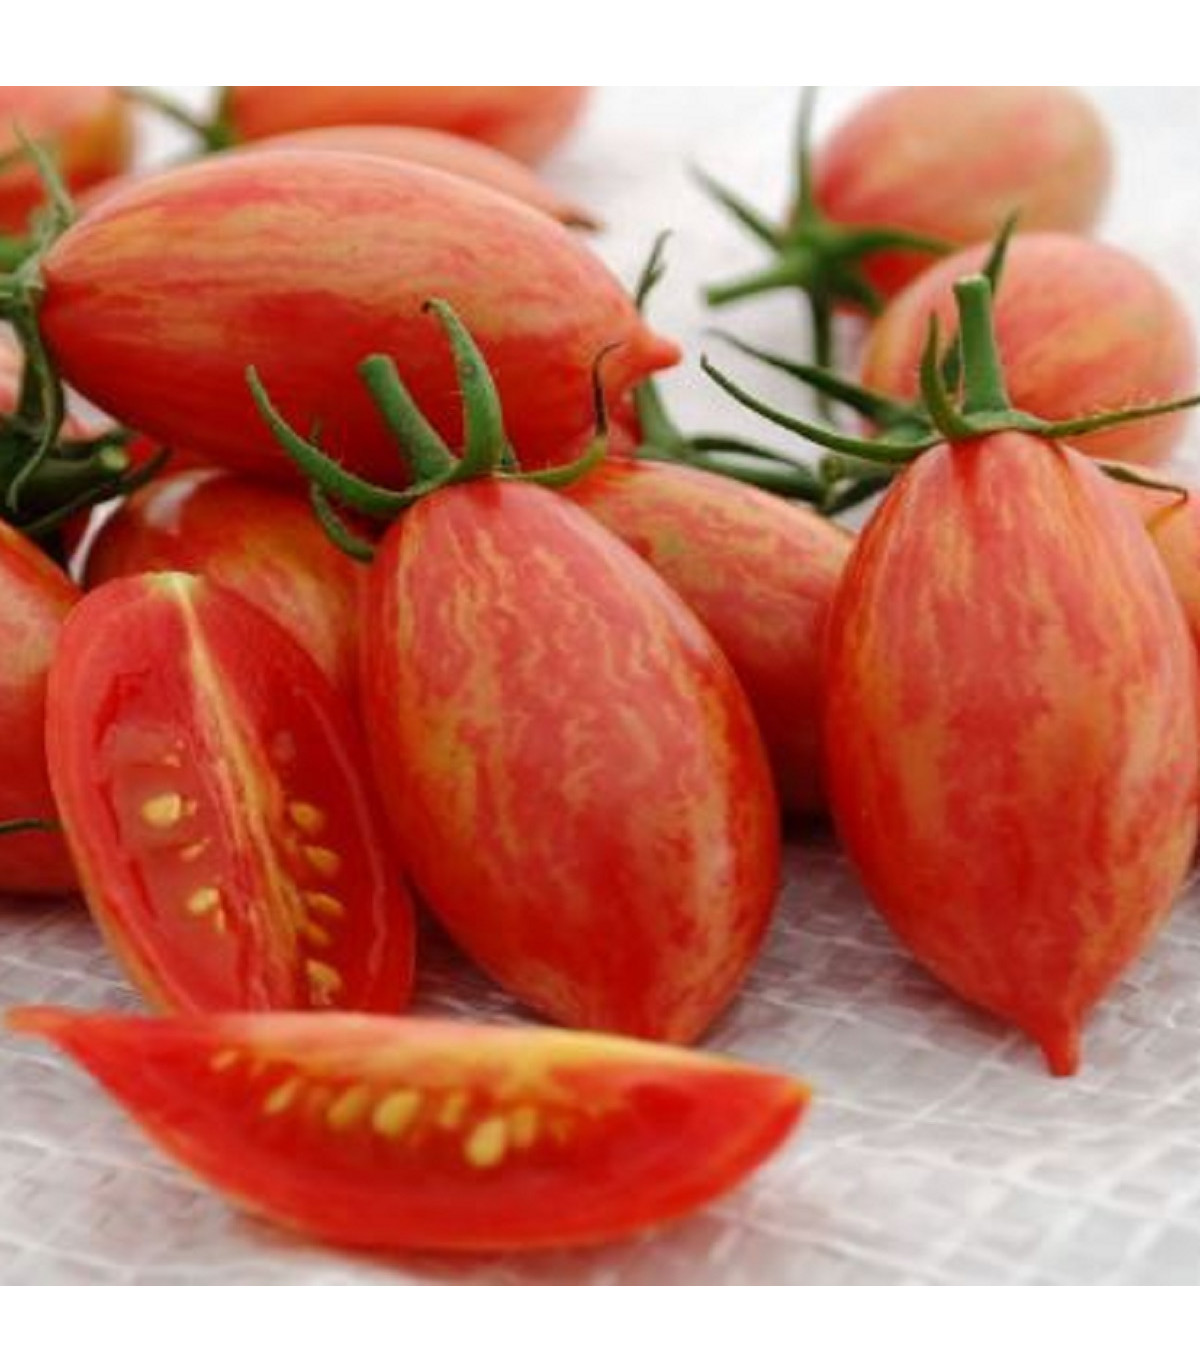 Rajče Artisan Pink Tiger - Solanum lycopersicum - osivo rajčat - 5 ks